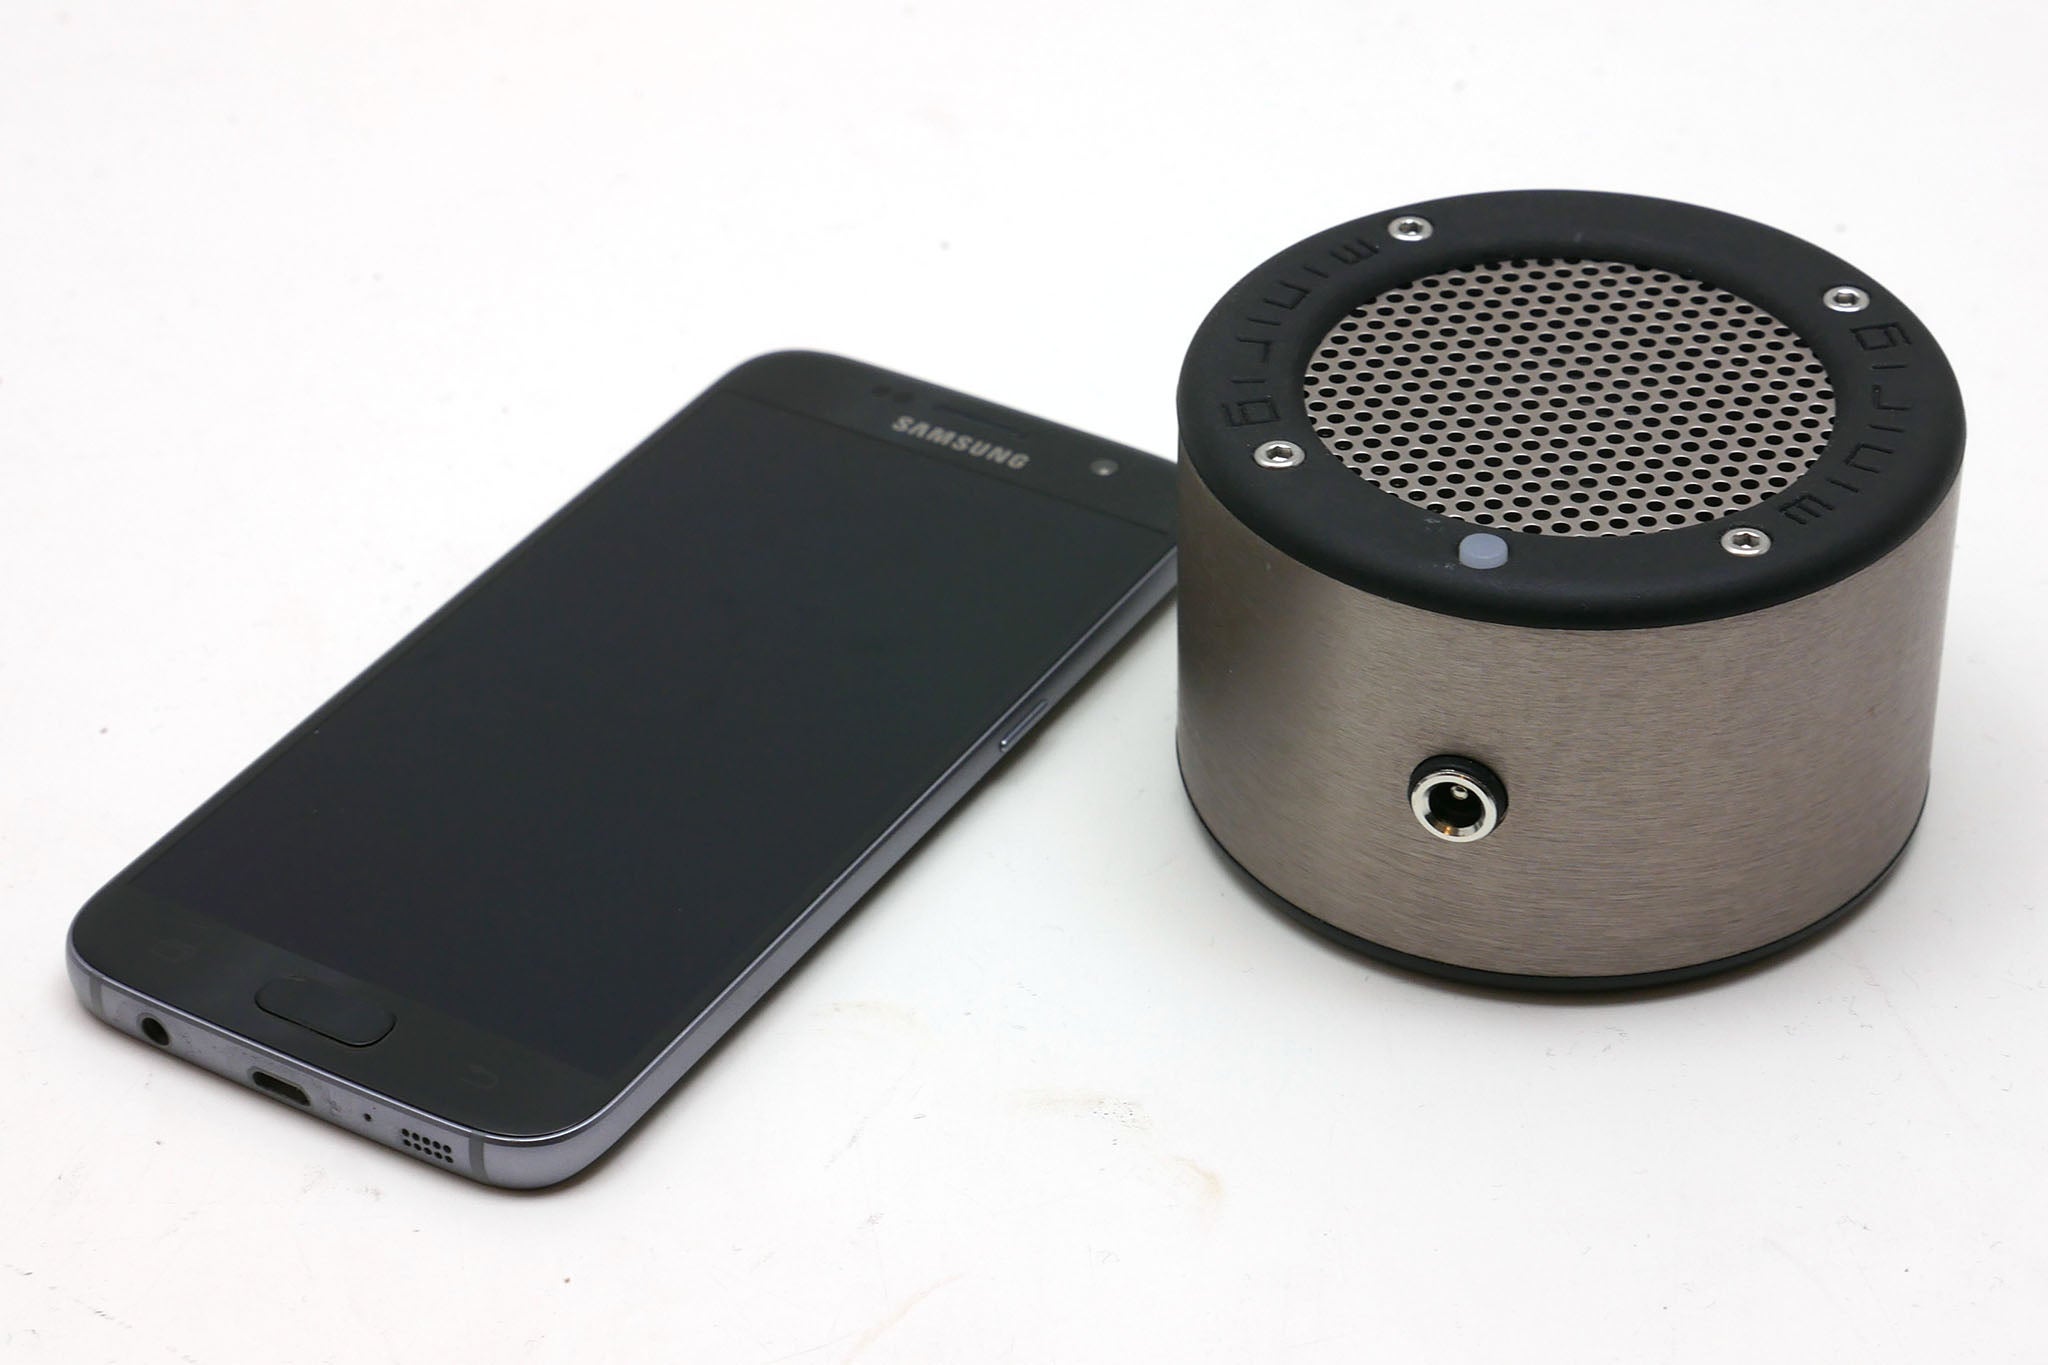 Minirig Mini portable speaker next to a Samsung smartphone.